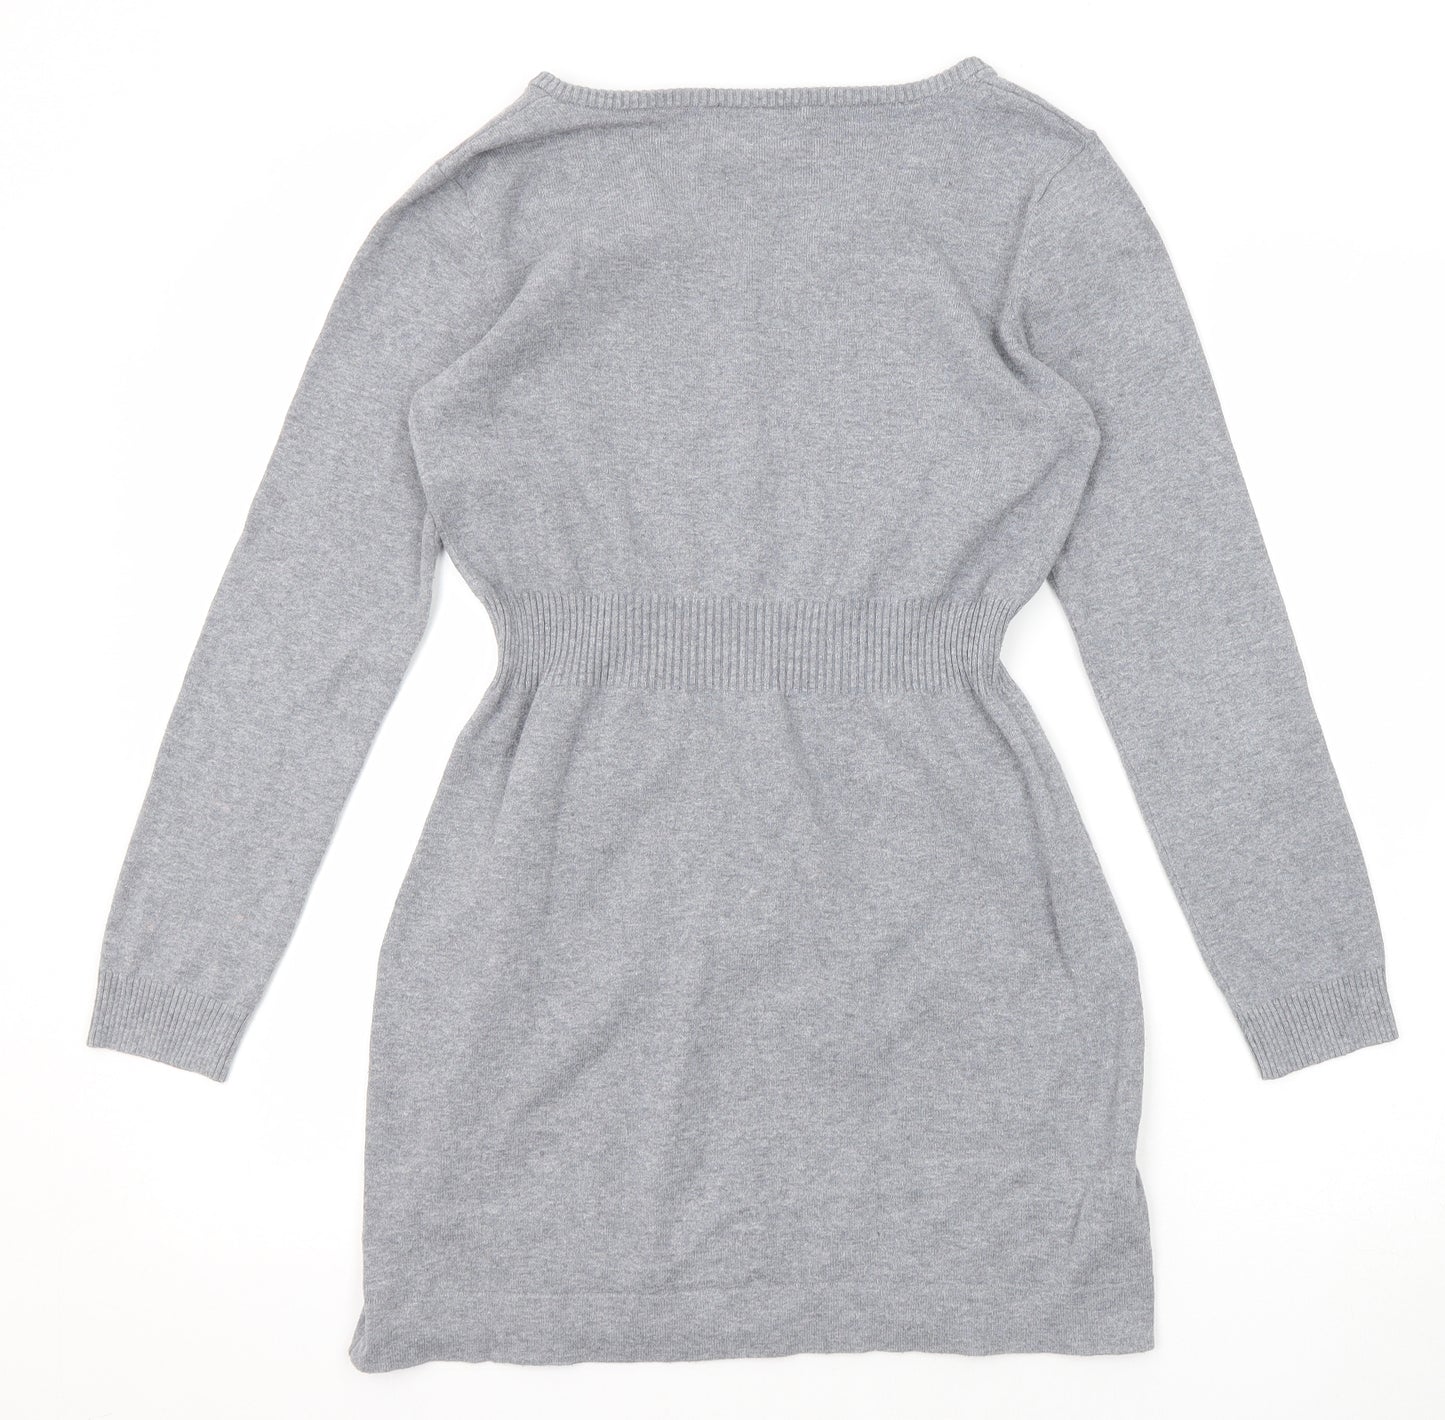 Mango Womens Grey Cotton Jumper Dress Size M V-Neck Pullover